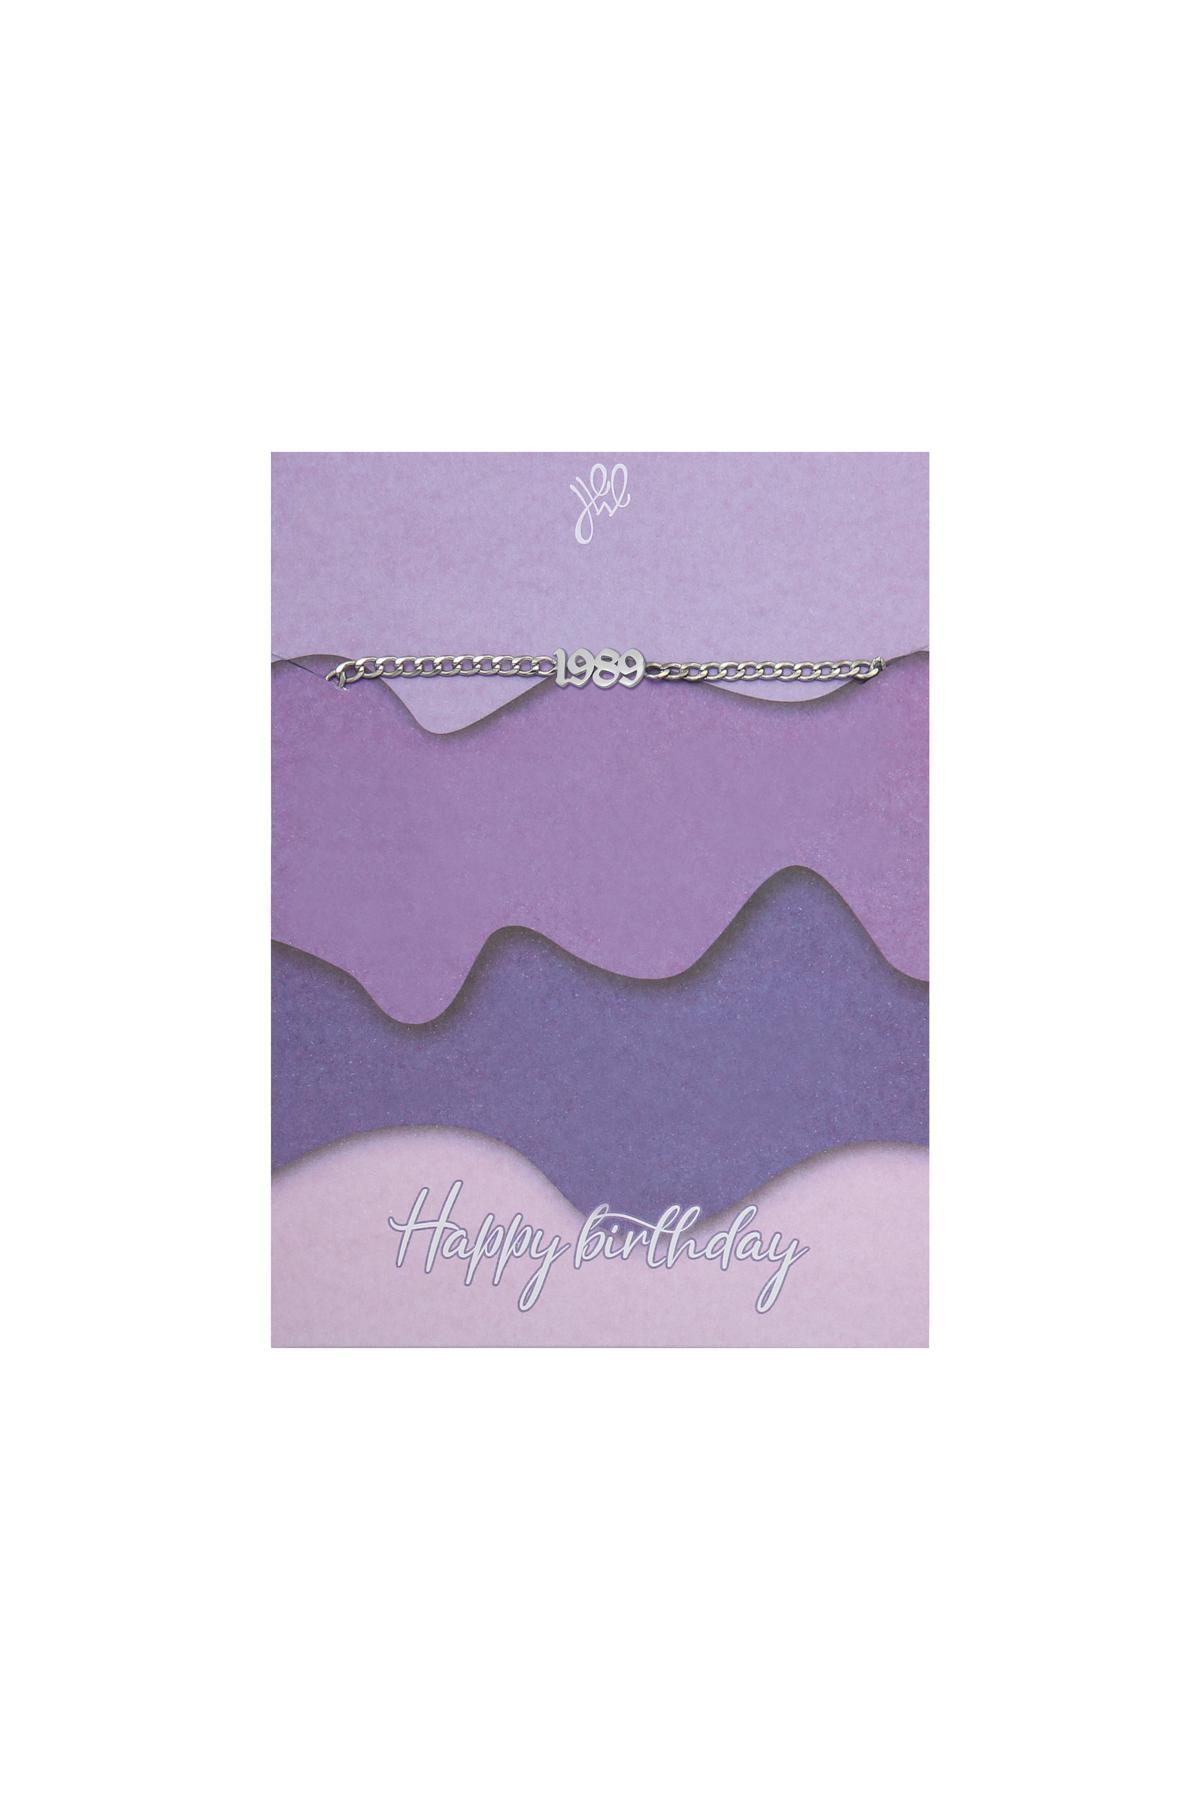 Silber / Armband Happy Birthday Years - 1989 Silber Edelstahl Bild10